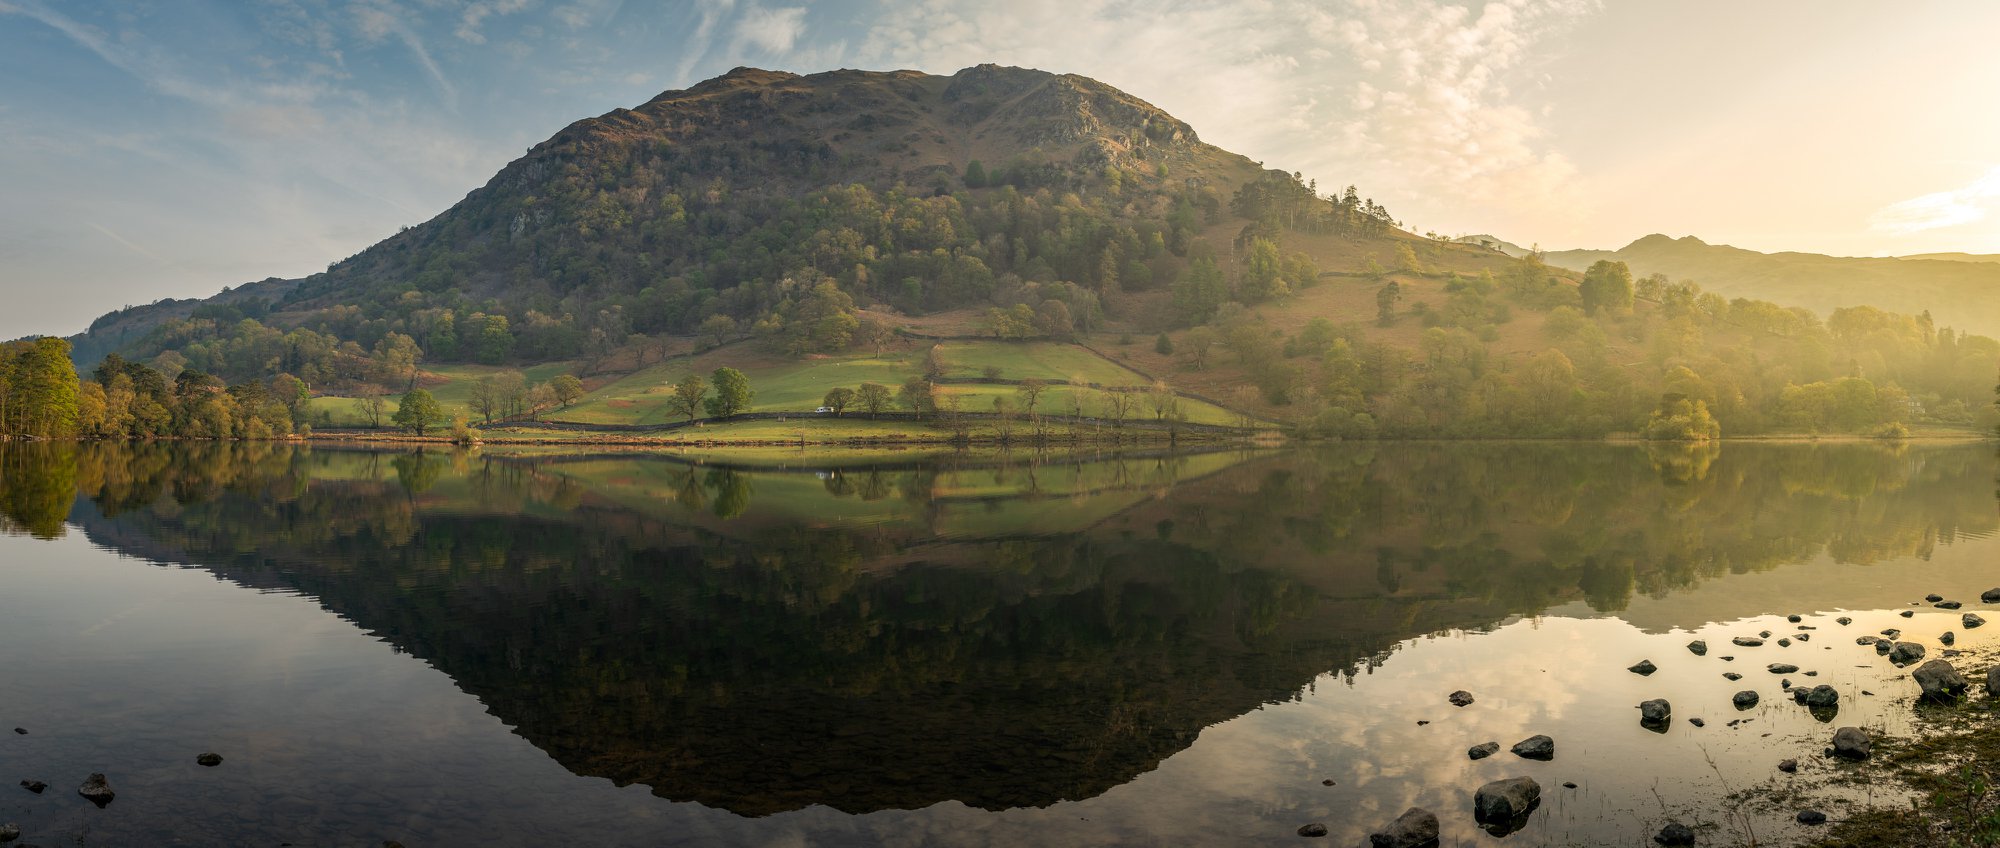 Ambleside, The Lake District, John Shedwick for Aerial Festival